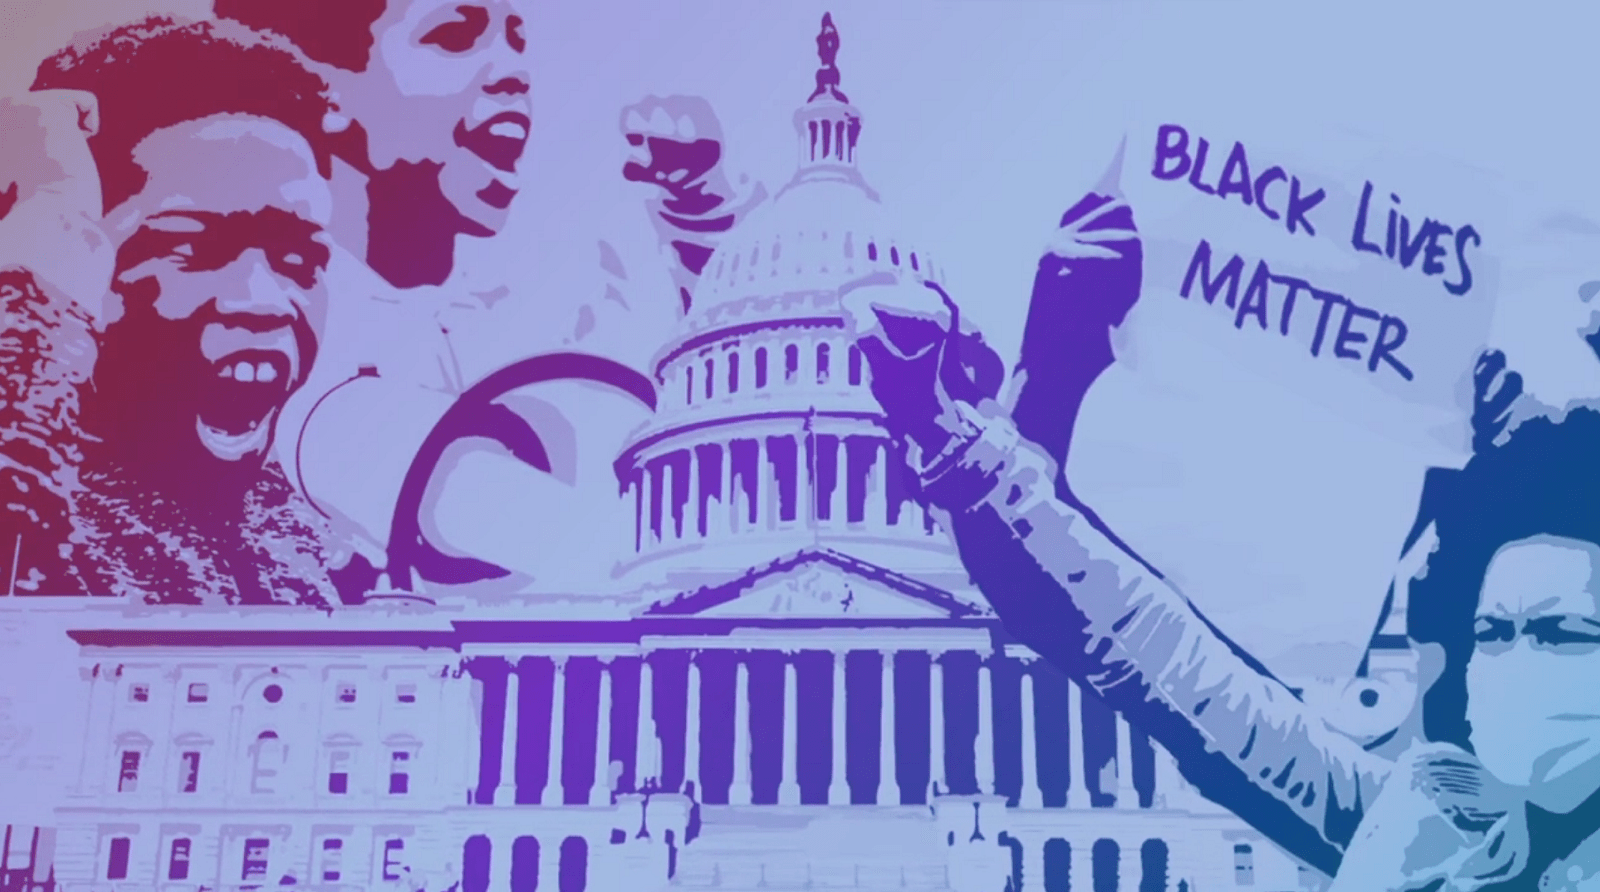 ongressional Black Caucus Foundation virtual event